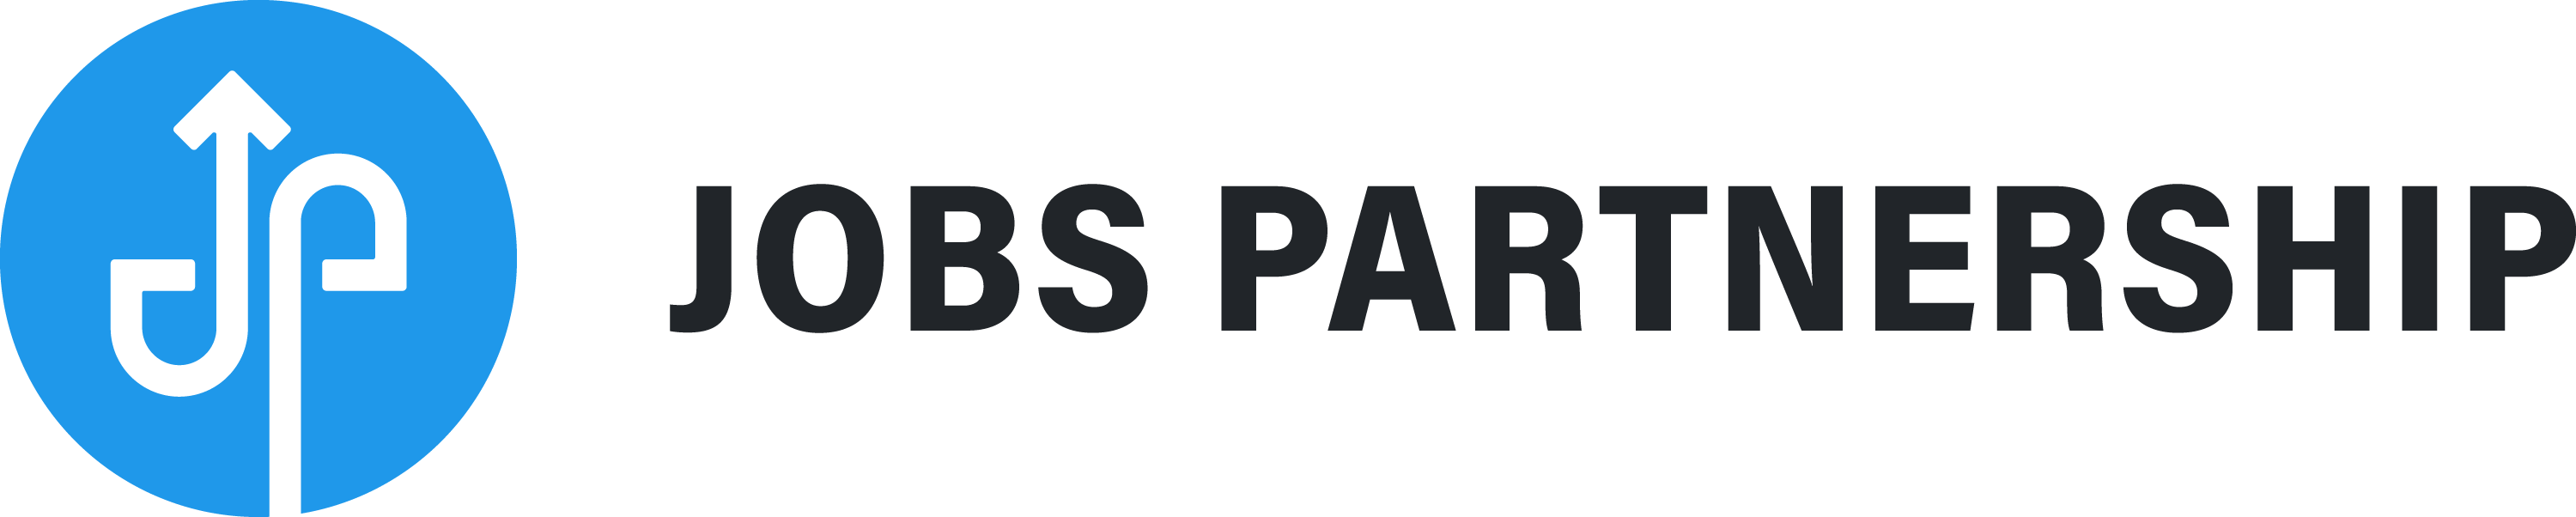 Jobs Partnership logo